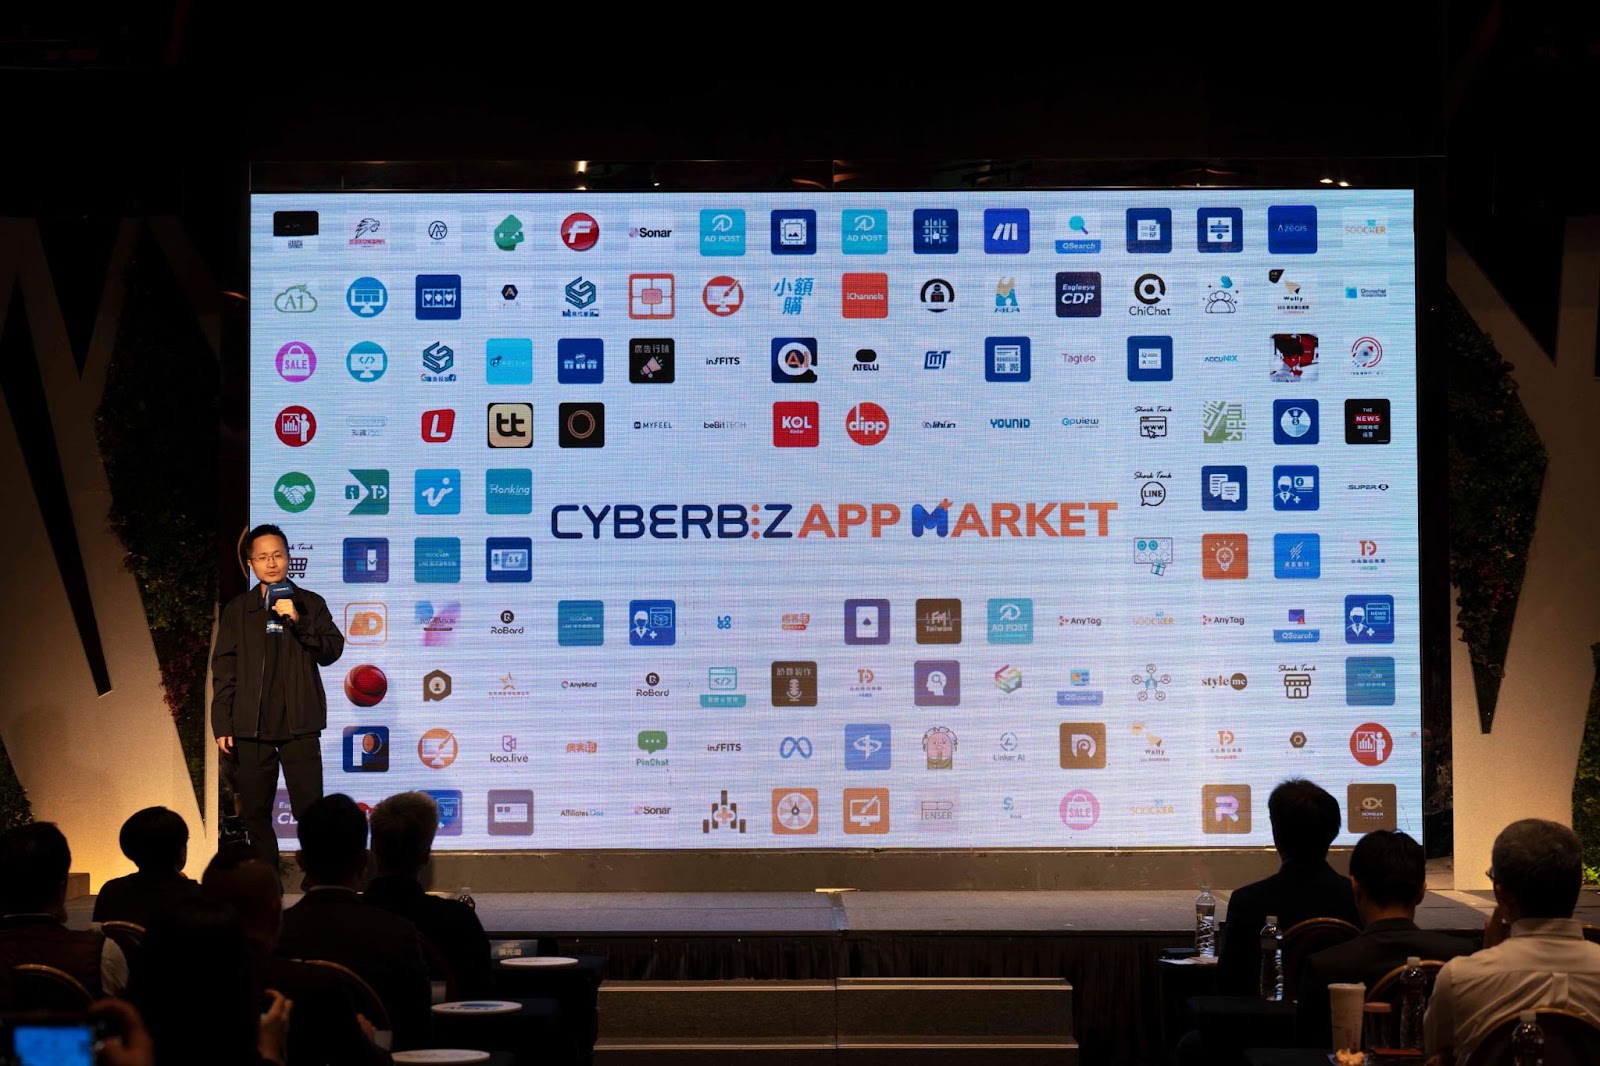 CYBERBIZ APP MARKET 已超過 70 家 MarTech 行銷科技合作夥伴、近 200 款工具服務上線